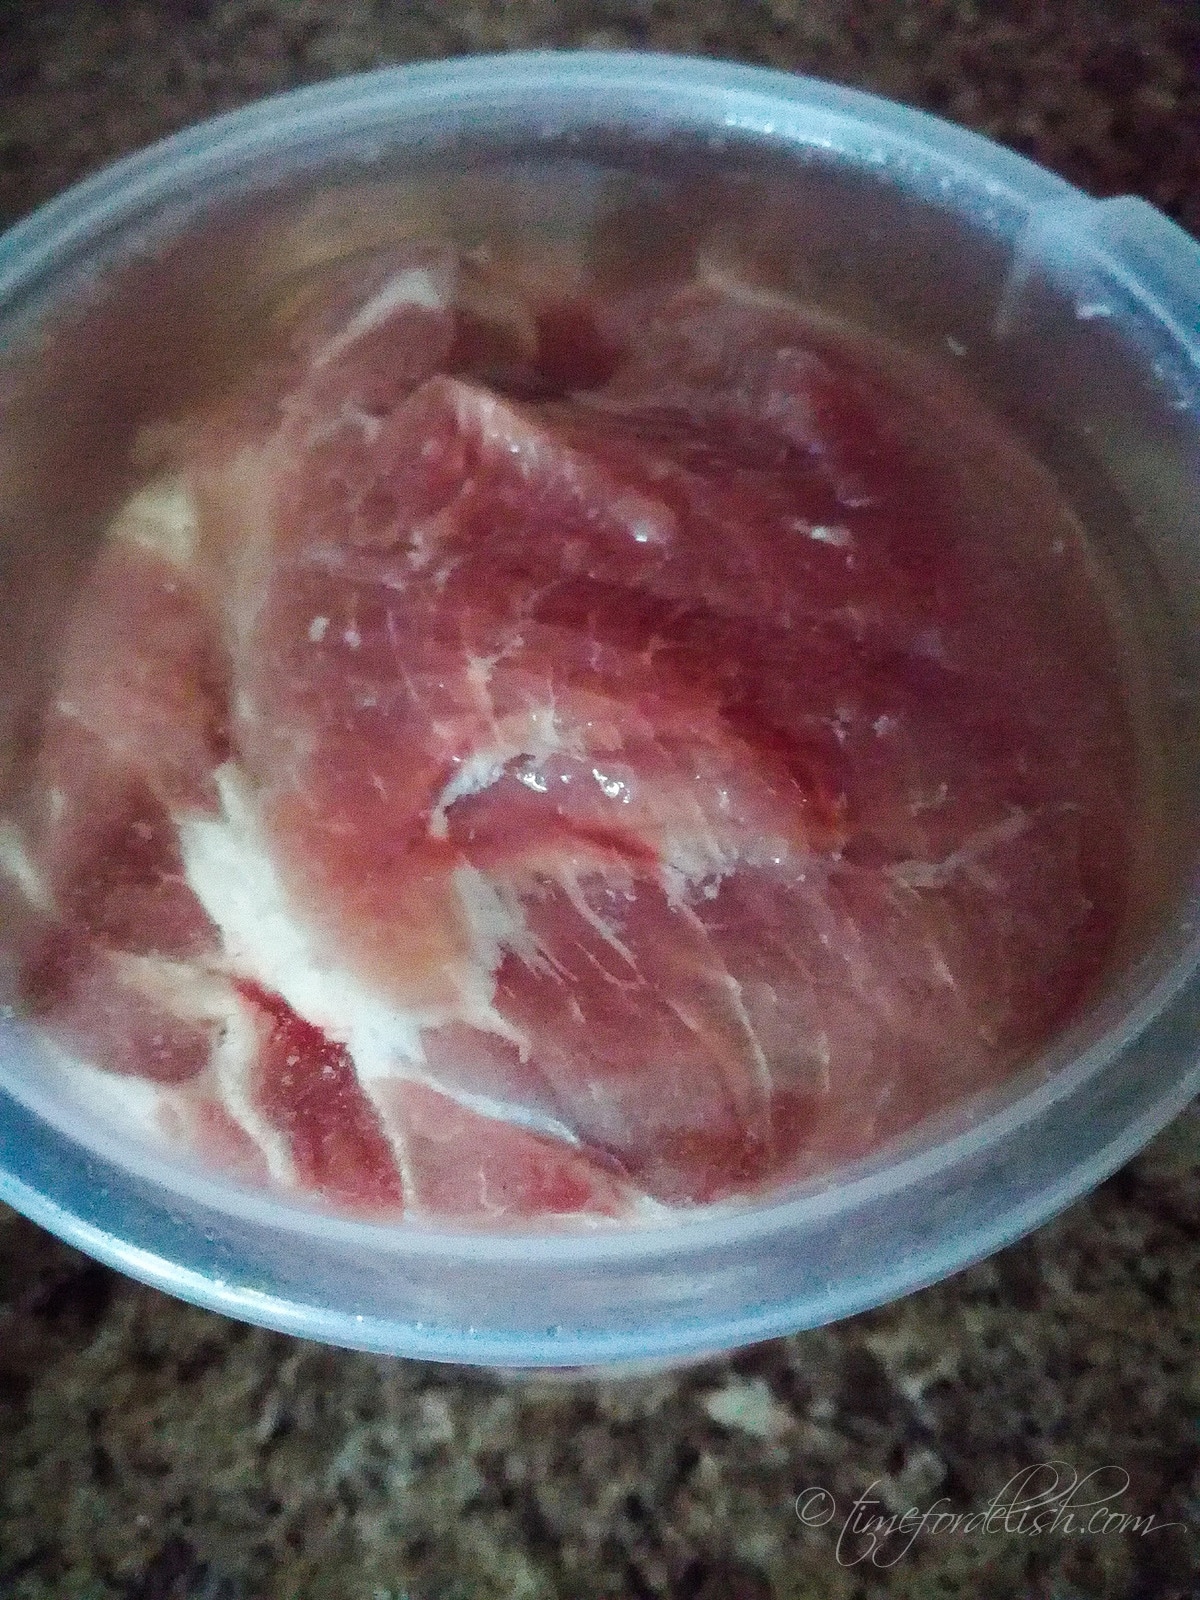 tenderizing meat with salt